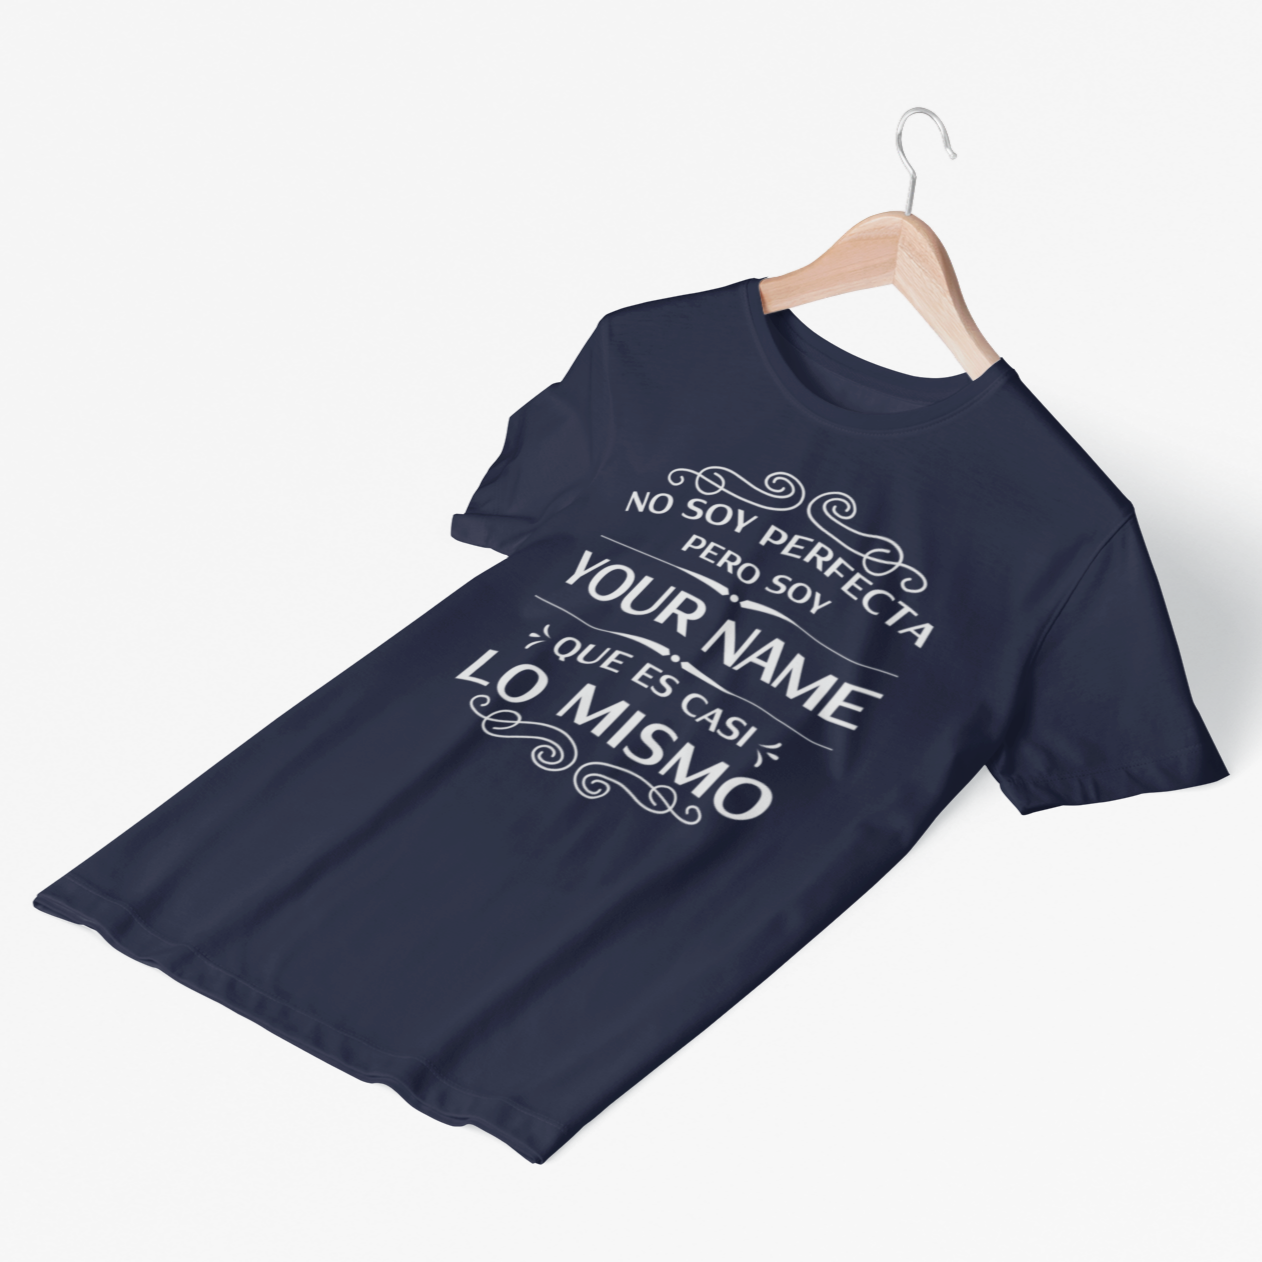 Personalized Apellido Women's T-Shirt